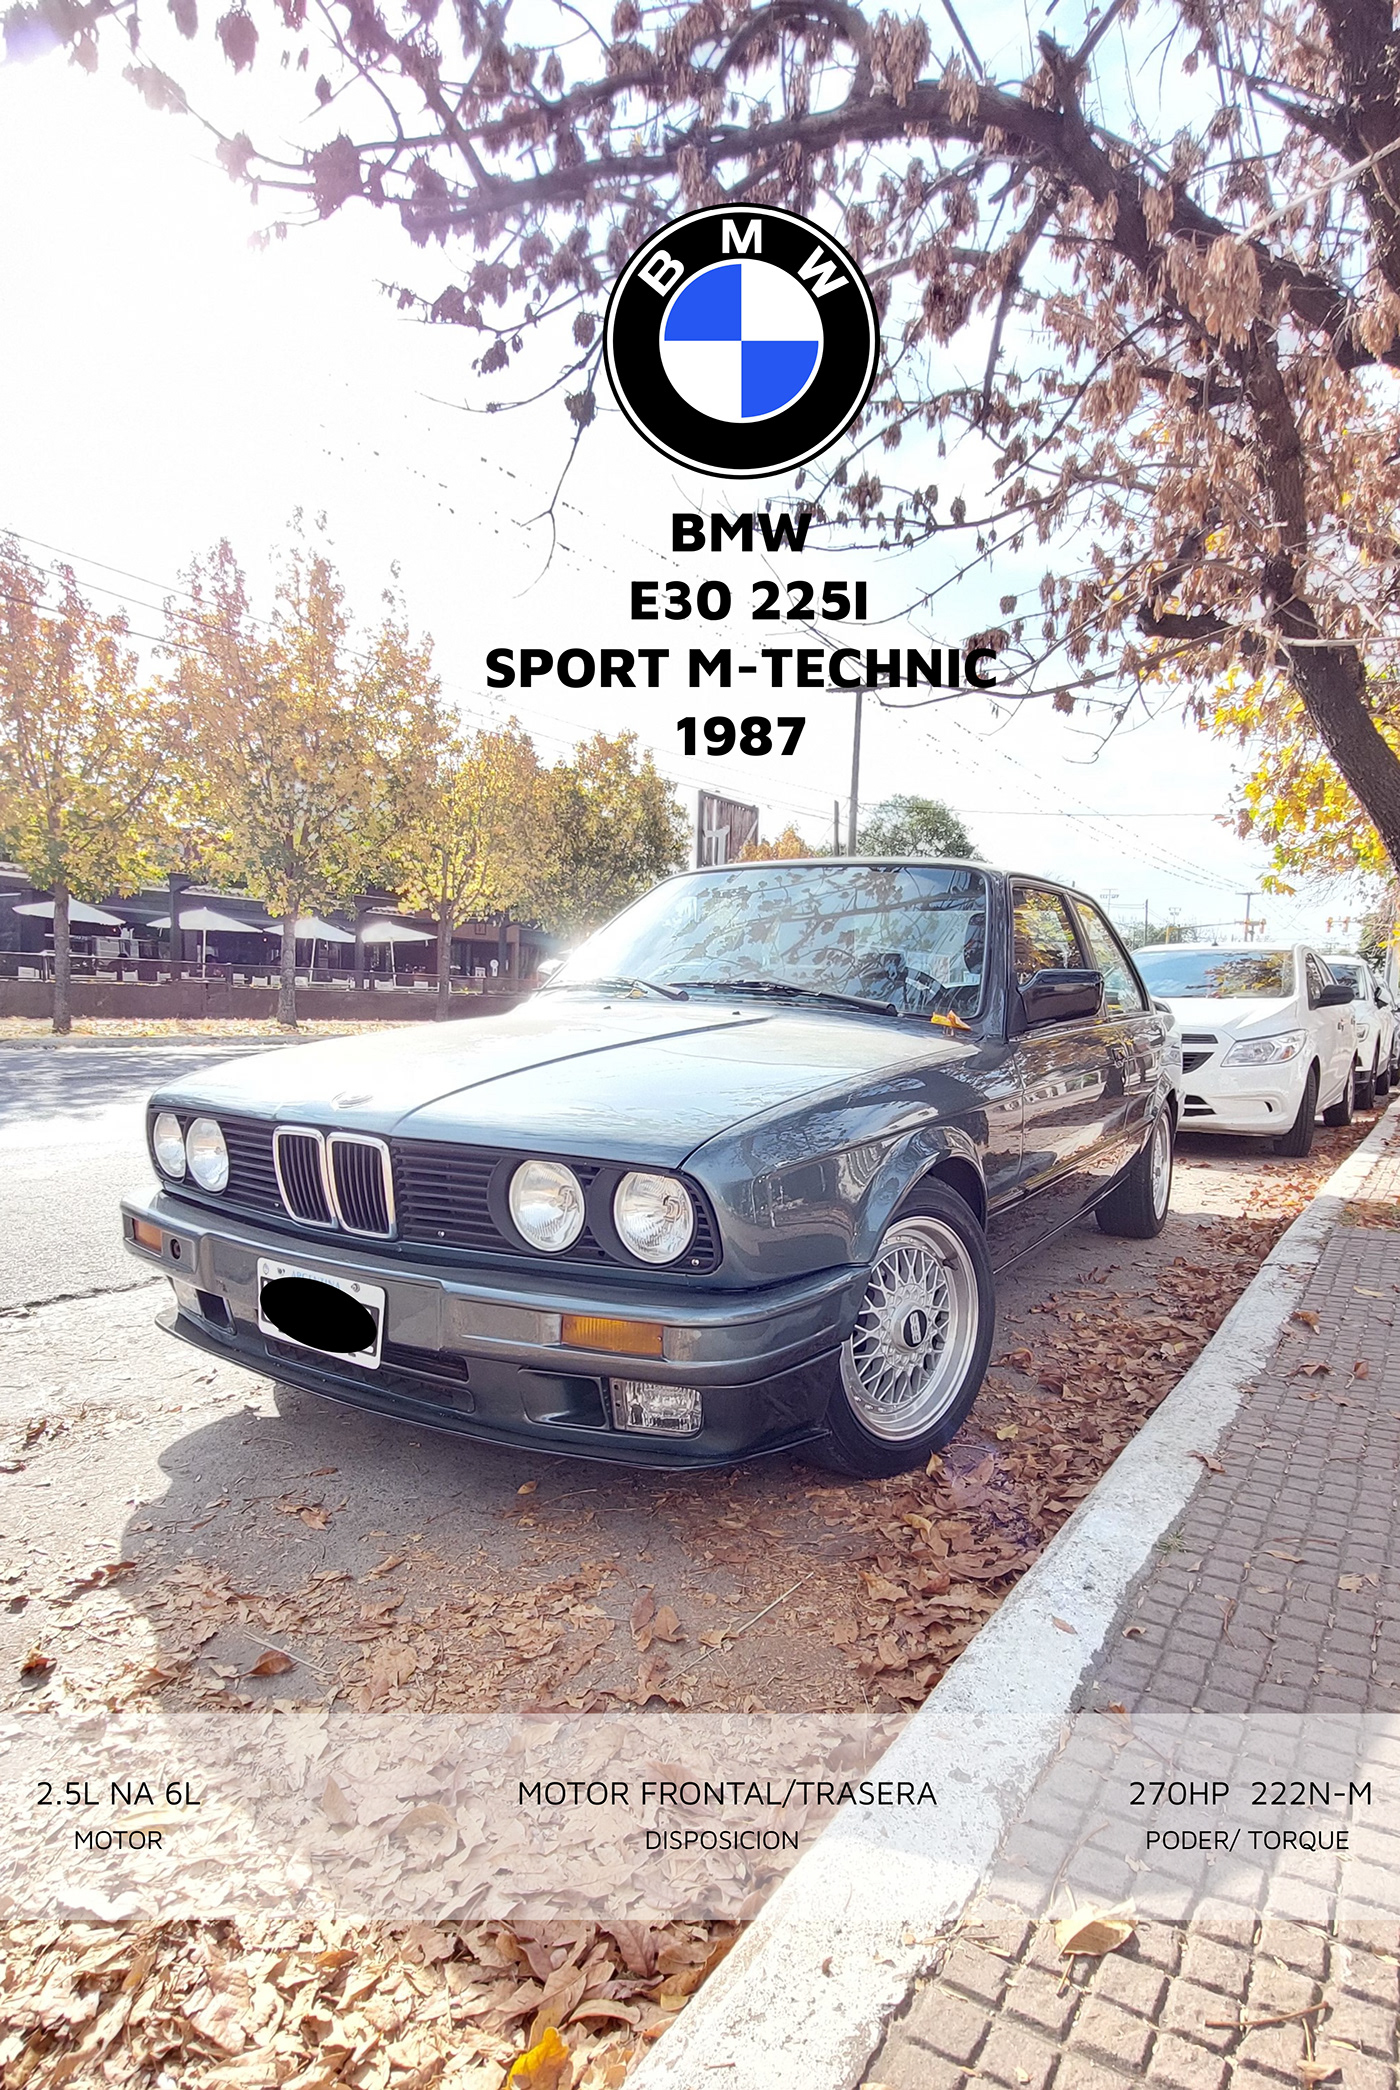 BMW E30 225I SPORT M-TECHNIC 1987
